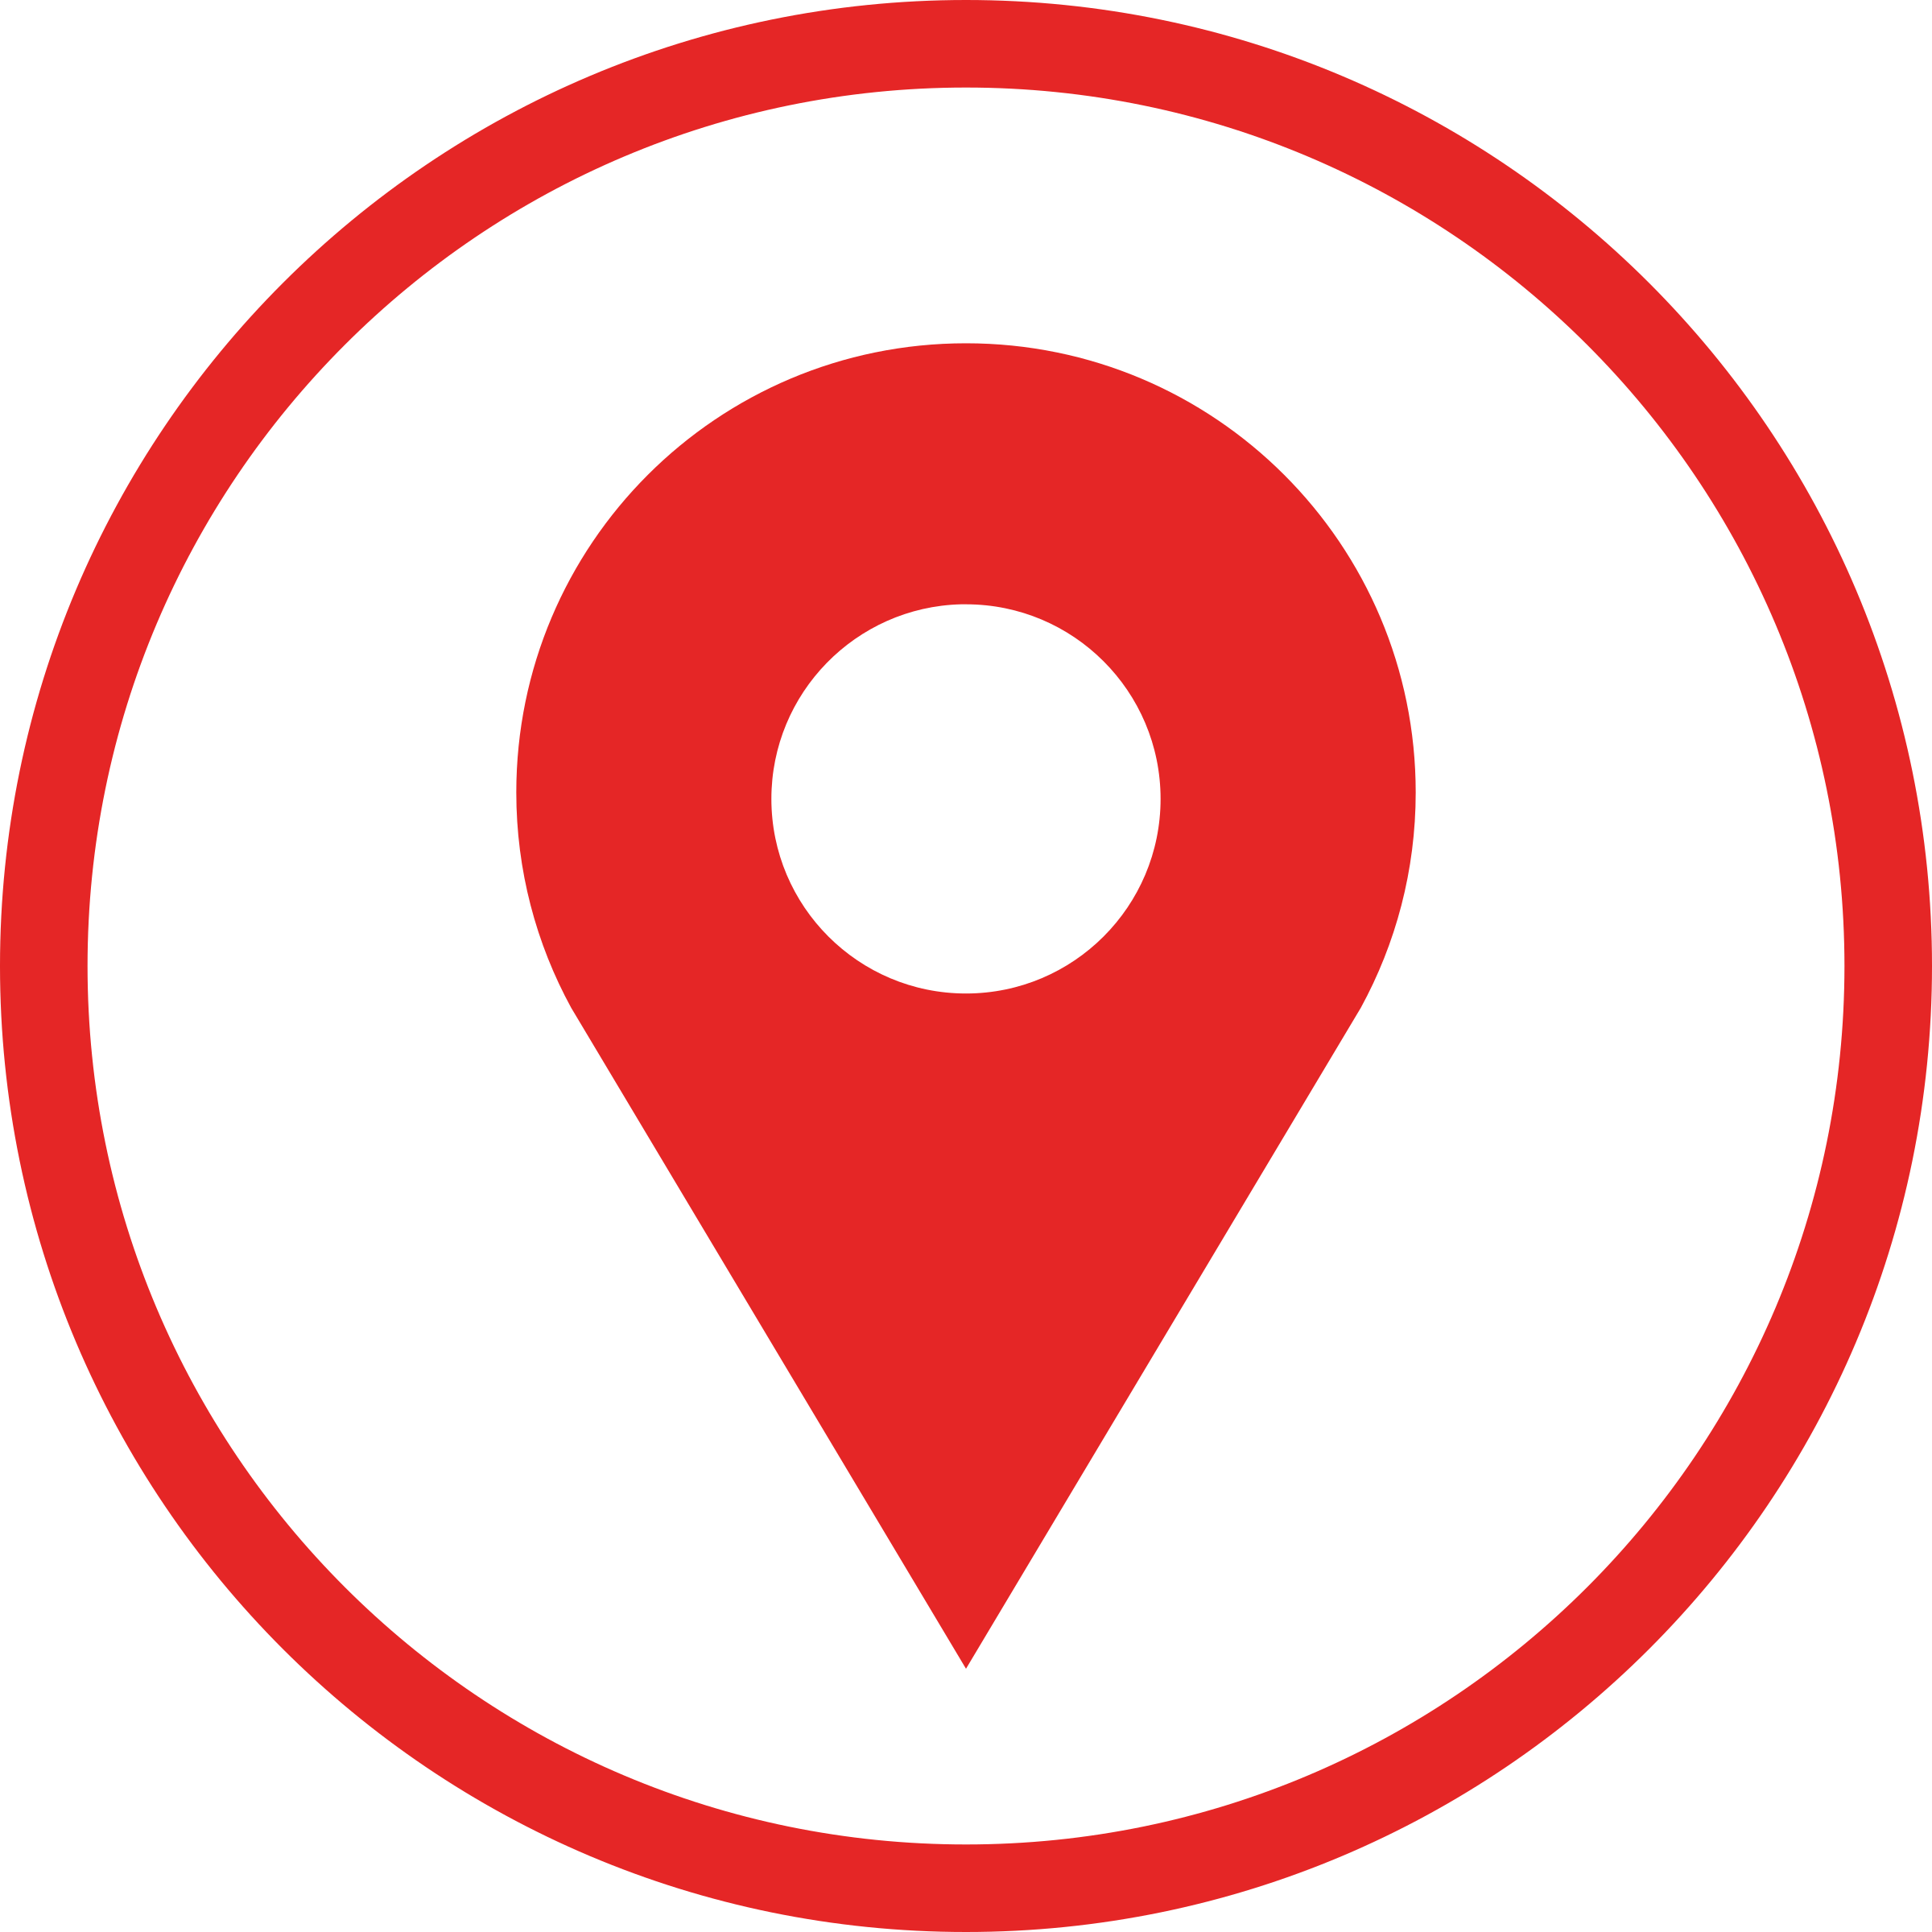 Location Logo - Flat location logo by lyuyhn | ANIIN | Logos, Map logo, Map